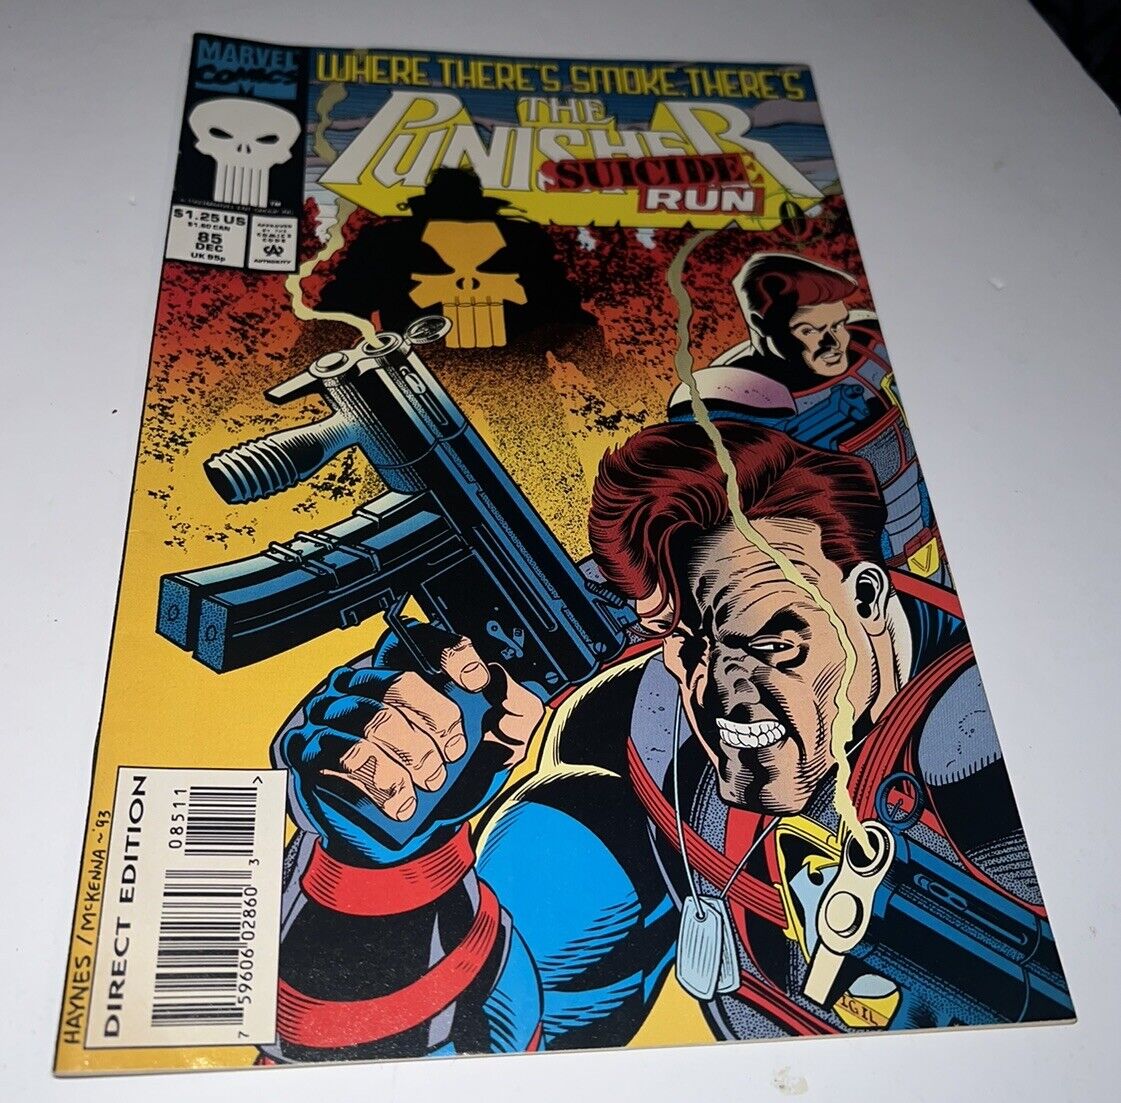 The Punisher #85 Marvel Comics December 1993 Suicide Run Comic Book